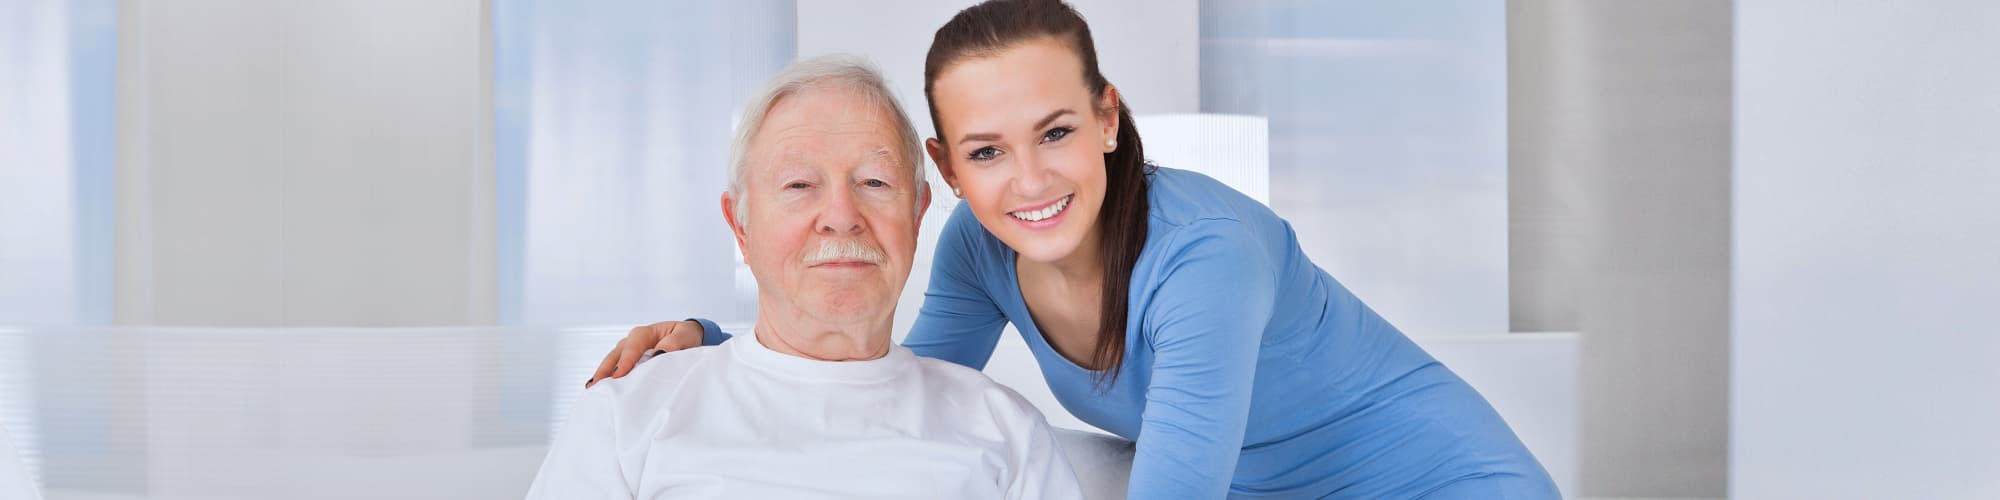 female caregiver and senior man smiling